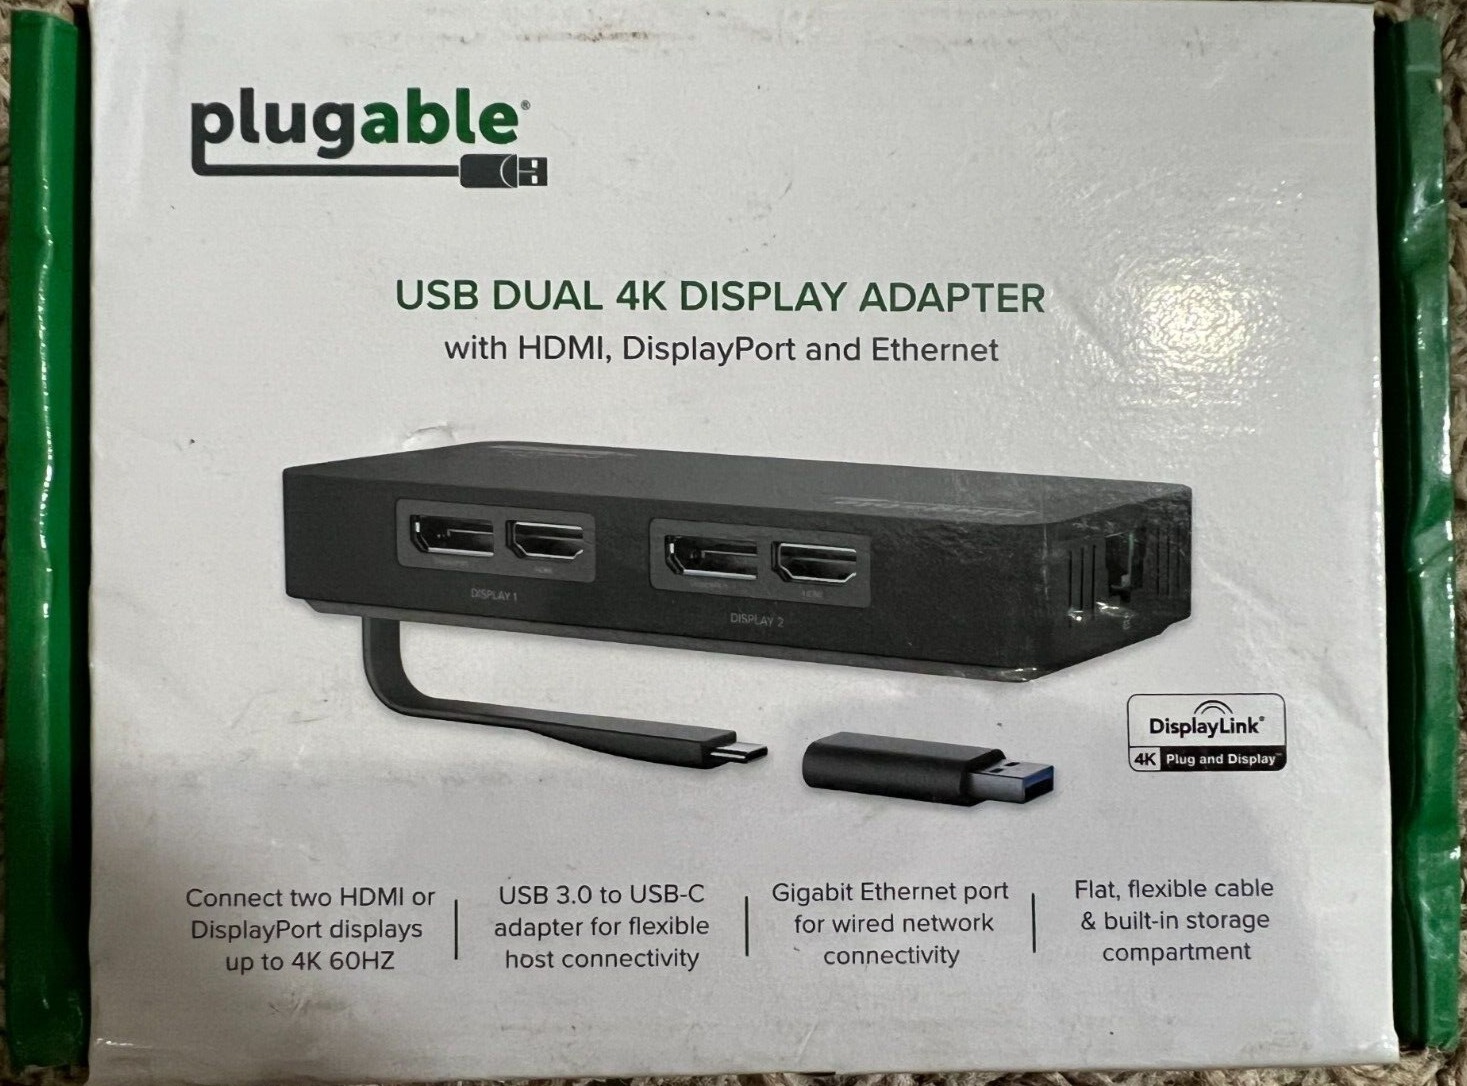 Plugable Technologies - Plugable USB Dual 4K Display Adapter With Ethernet